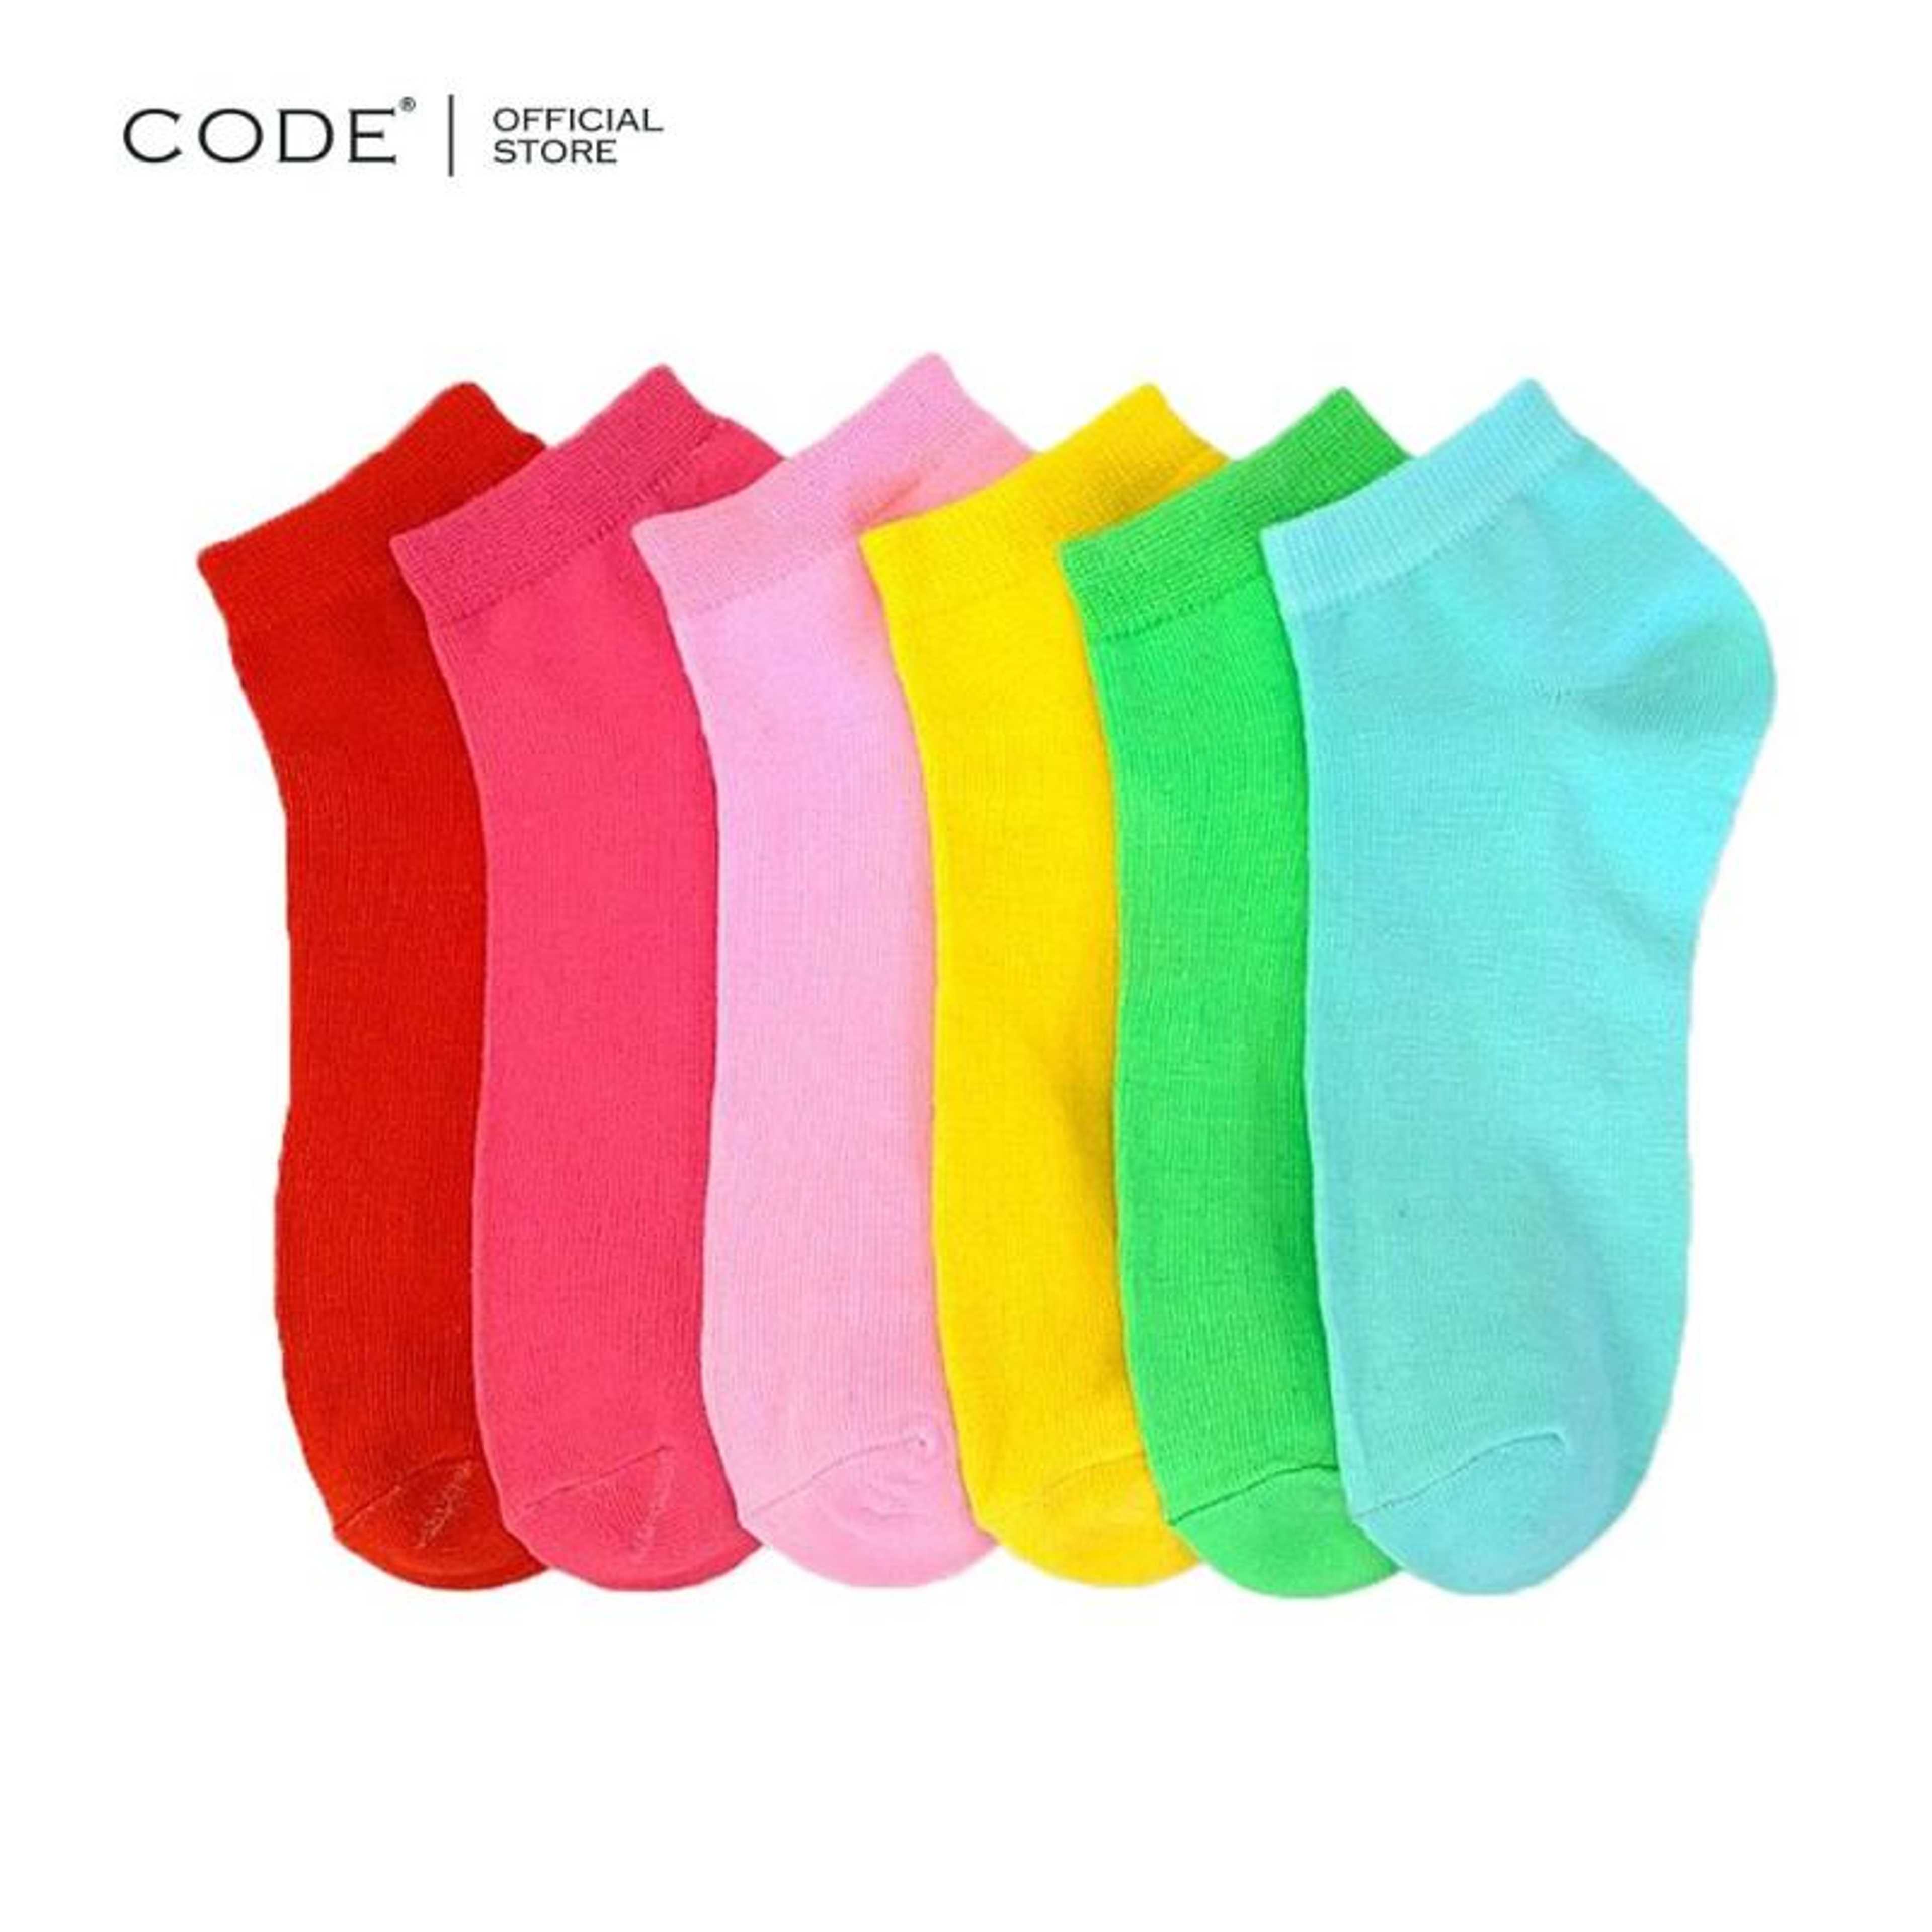 Code 6 Pairs Cotton Ankle Socks For Men Women  Cotton Ankle Socks For Men  No Show Low Cut Socks For Men  Business Casual Socks For Men - 3 Random Colors